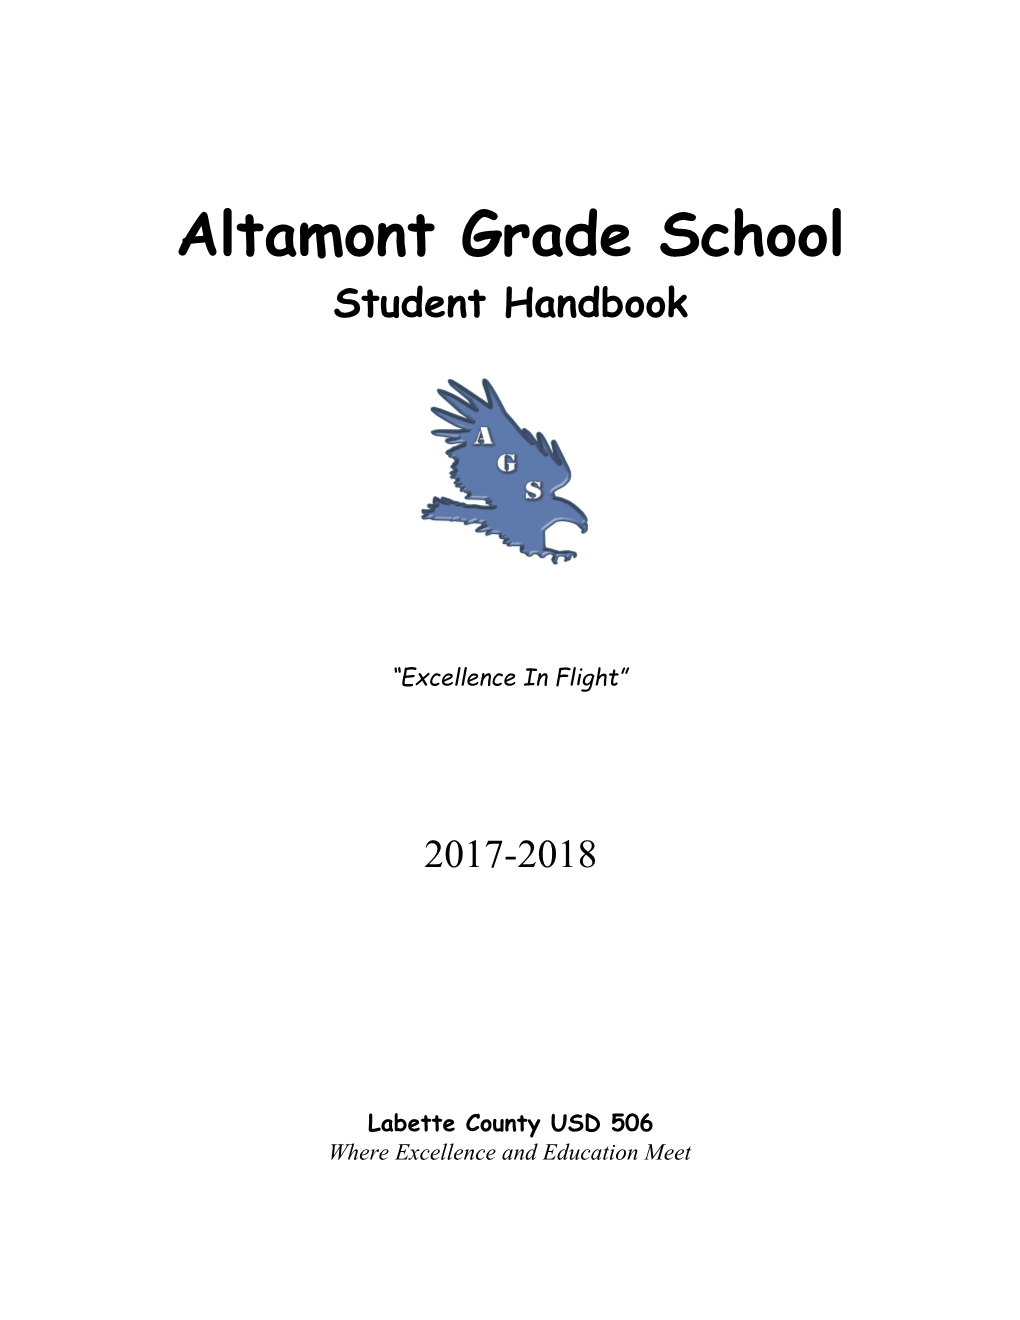 Altamont Grade School Handbook